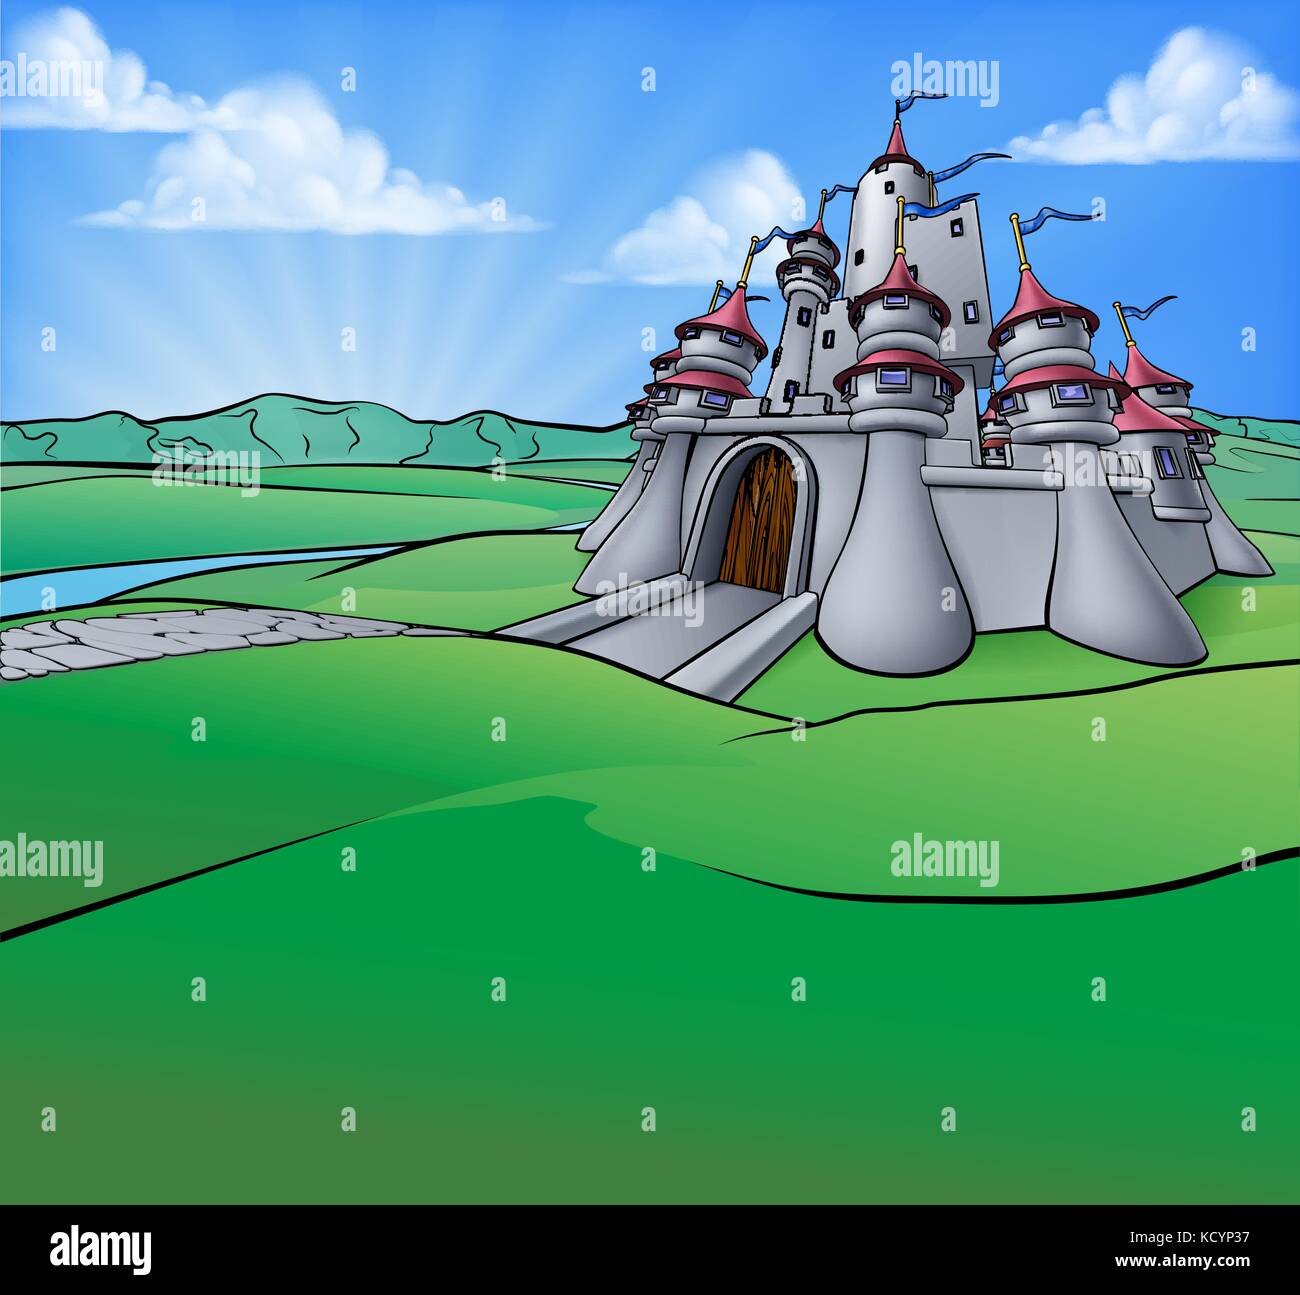 Castle Cartoon Scene Background Stock Vector